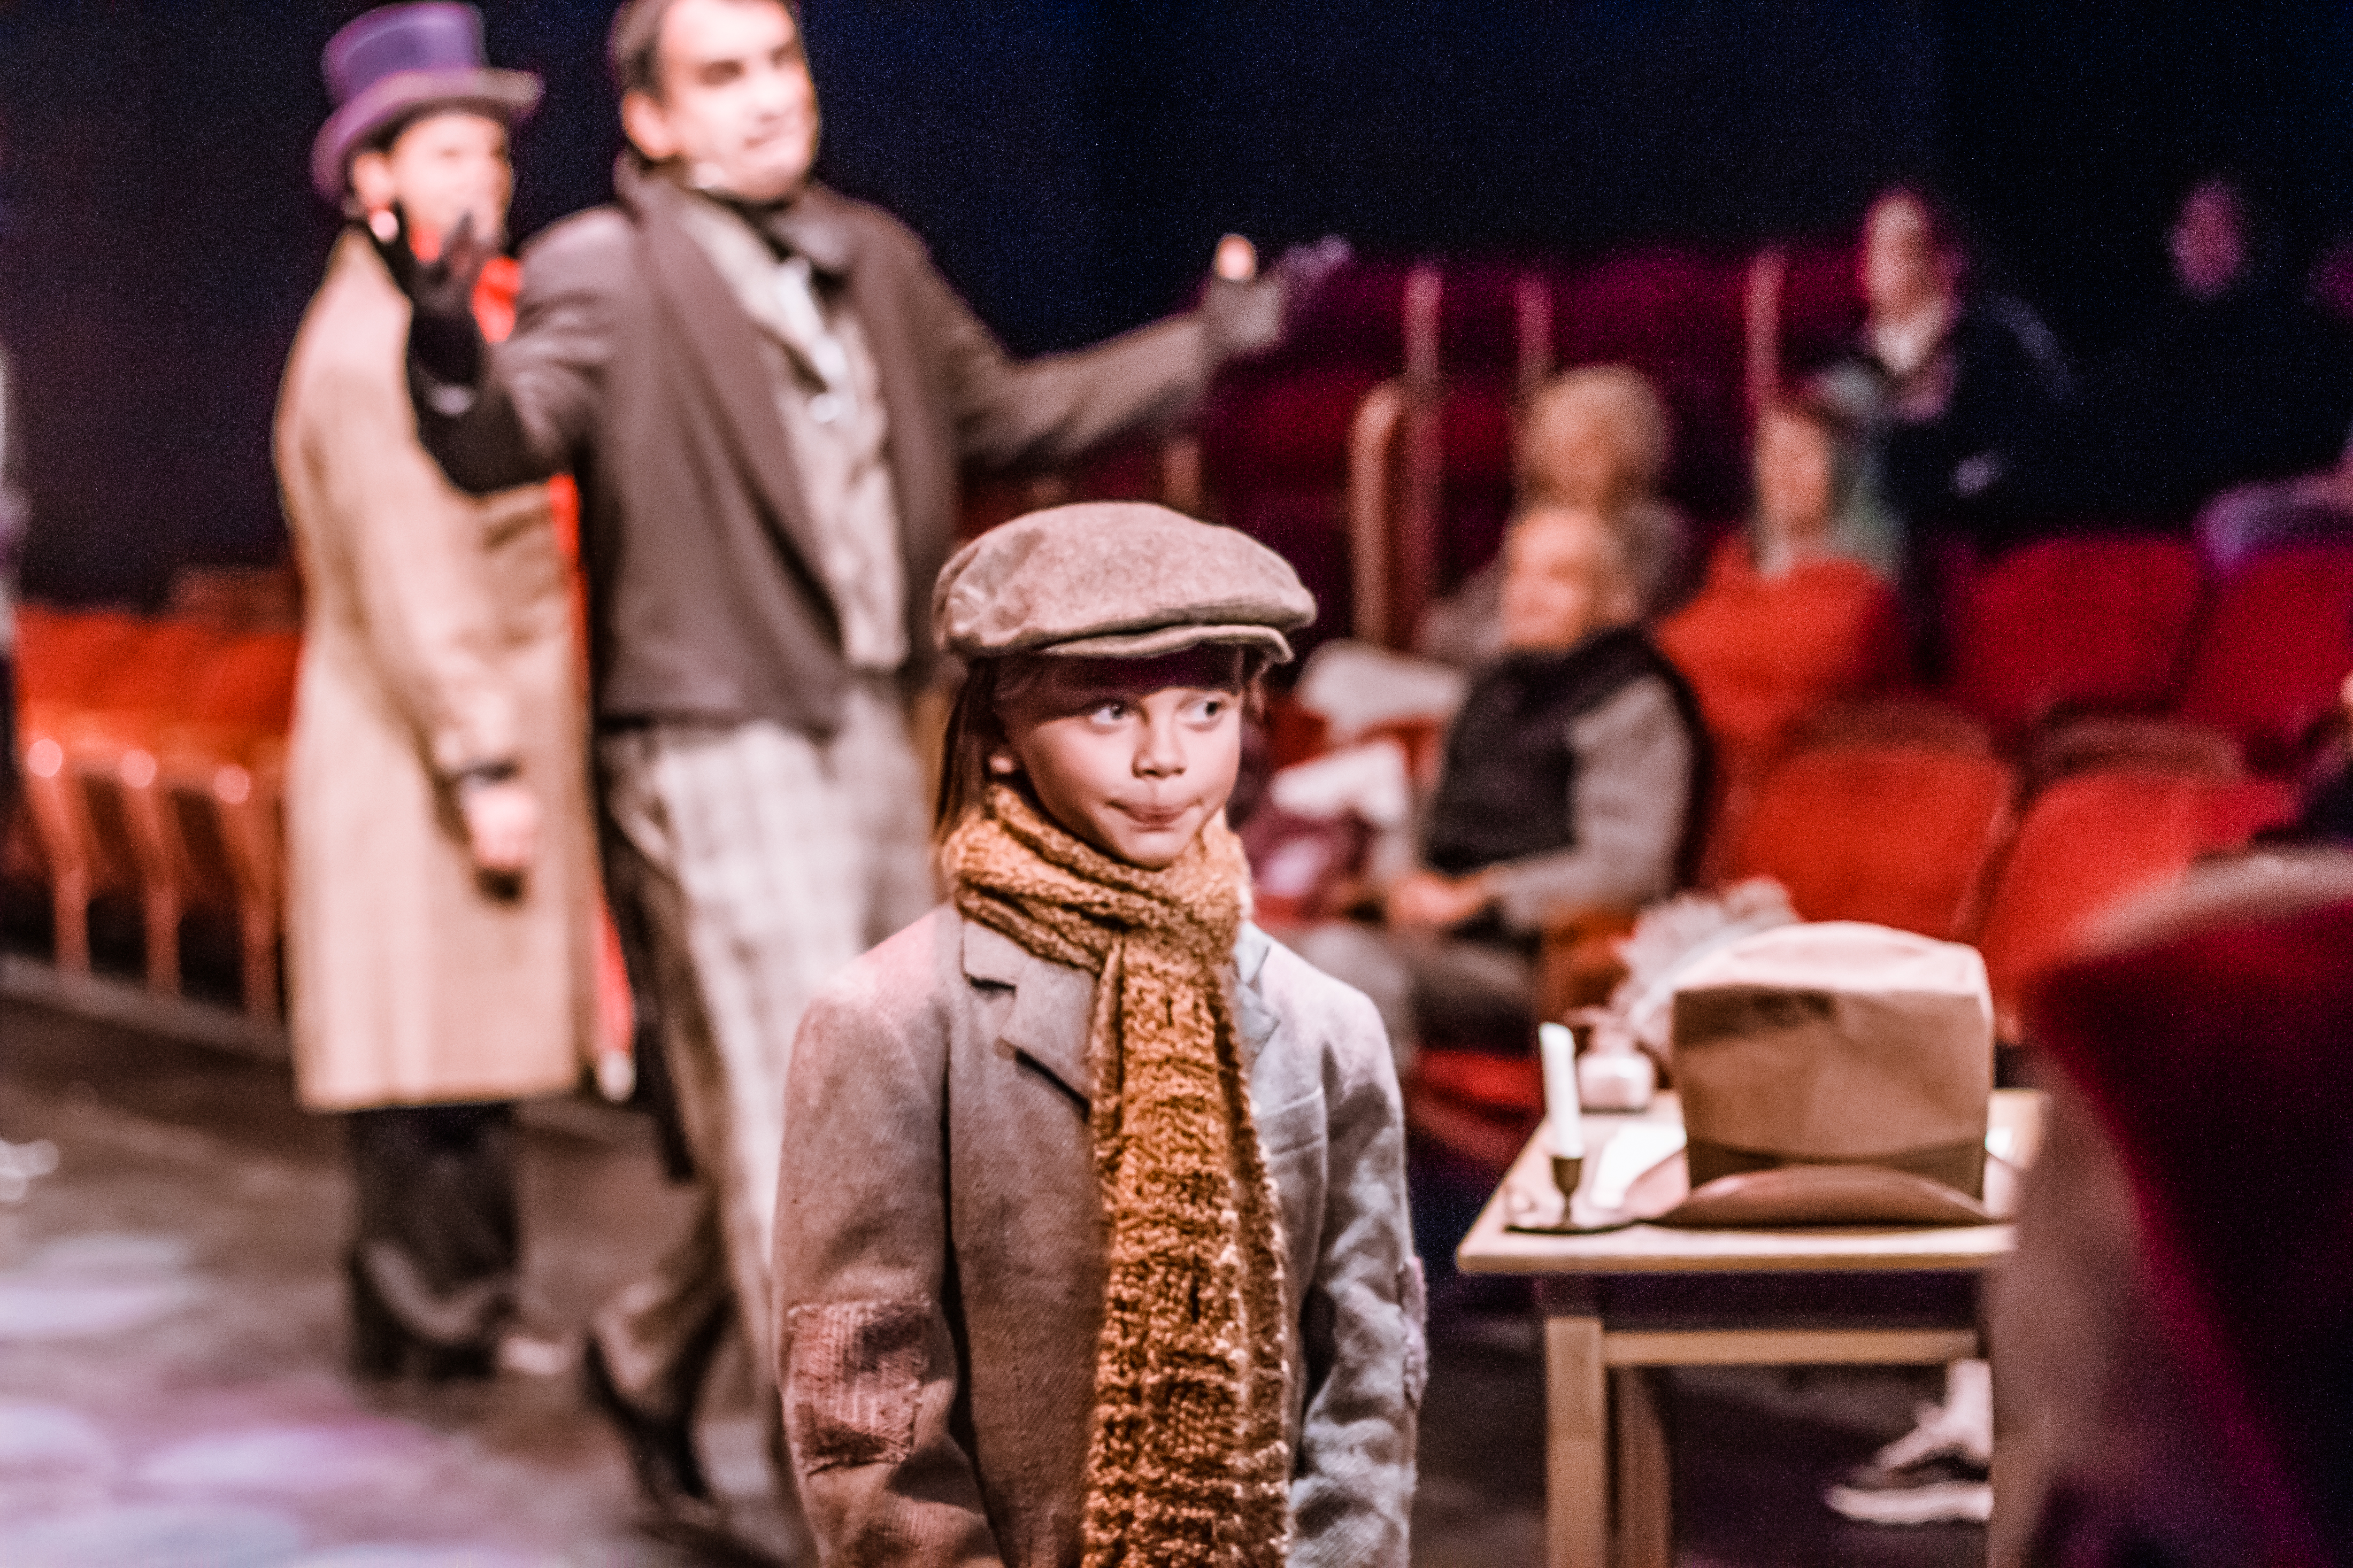 Performance as Tiny Tim {A Christmas Carol} LongBeach Playhouse Dec 2013